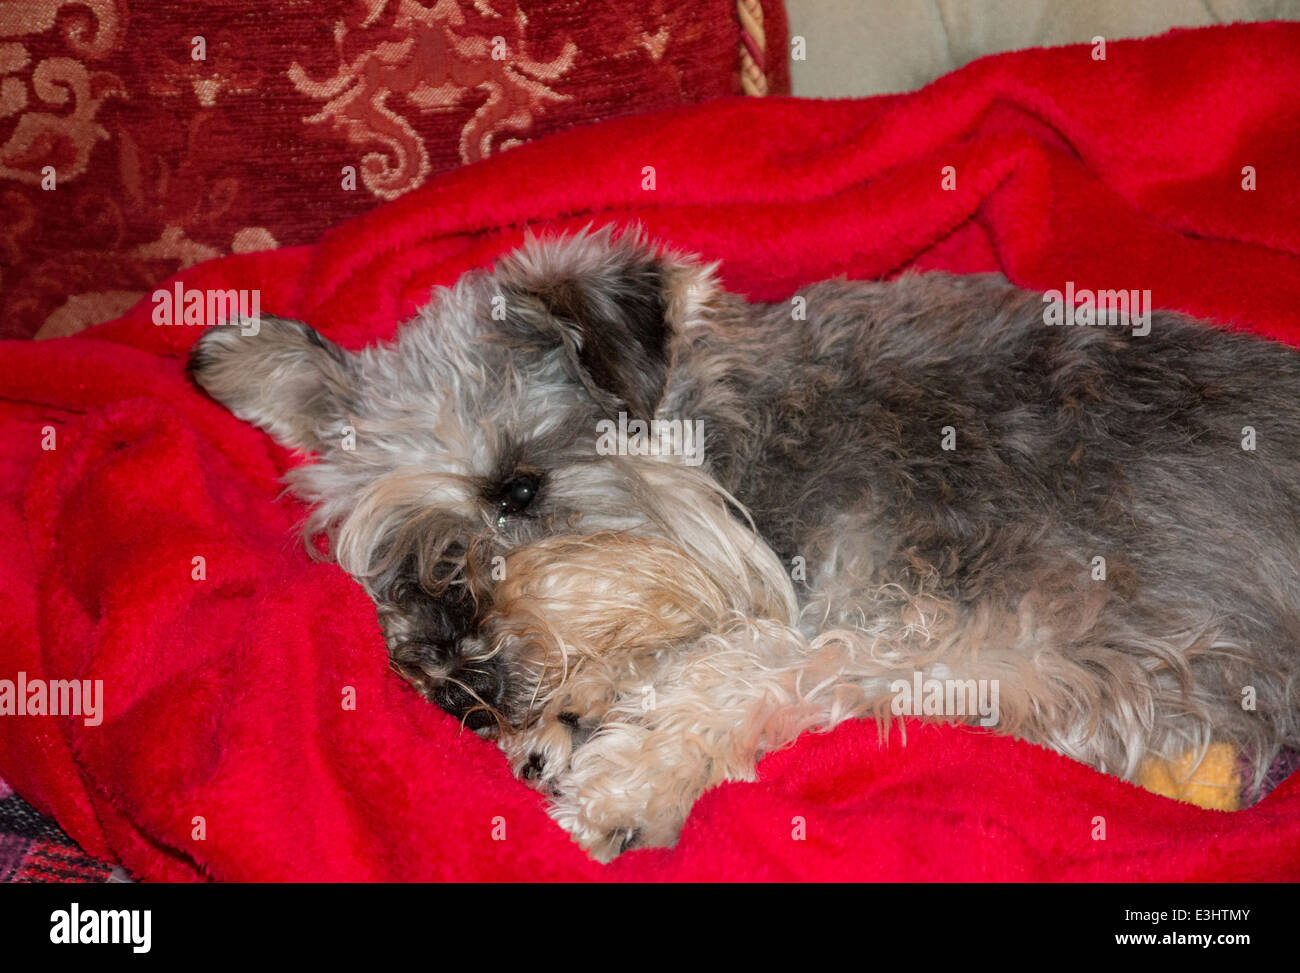 Sleeping miniature schnauzer on a red blanket Stock Photo